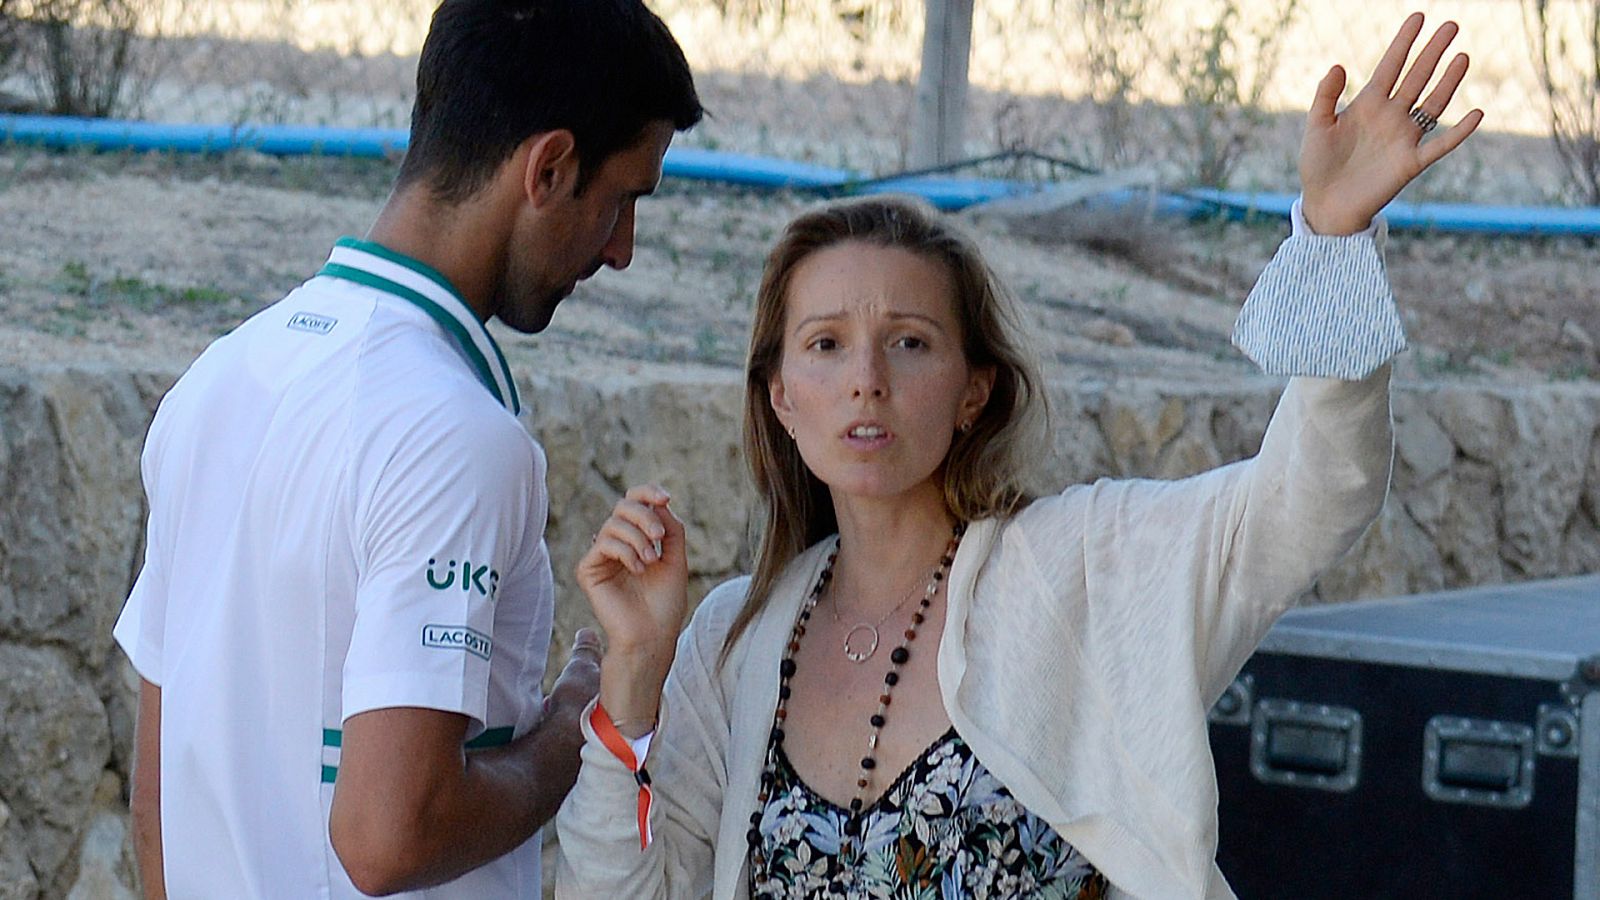 Jelena, la mujer de Djokovic: "Voy a respirar hondo para calmarme"